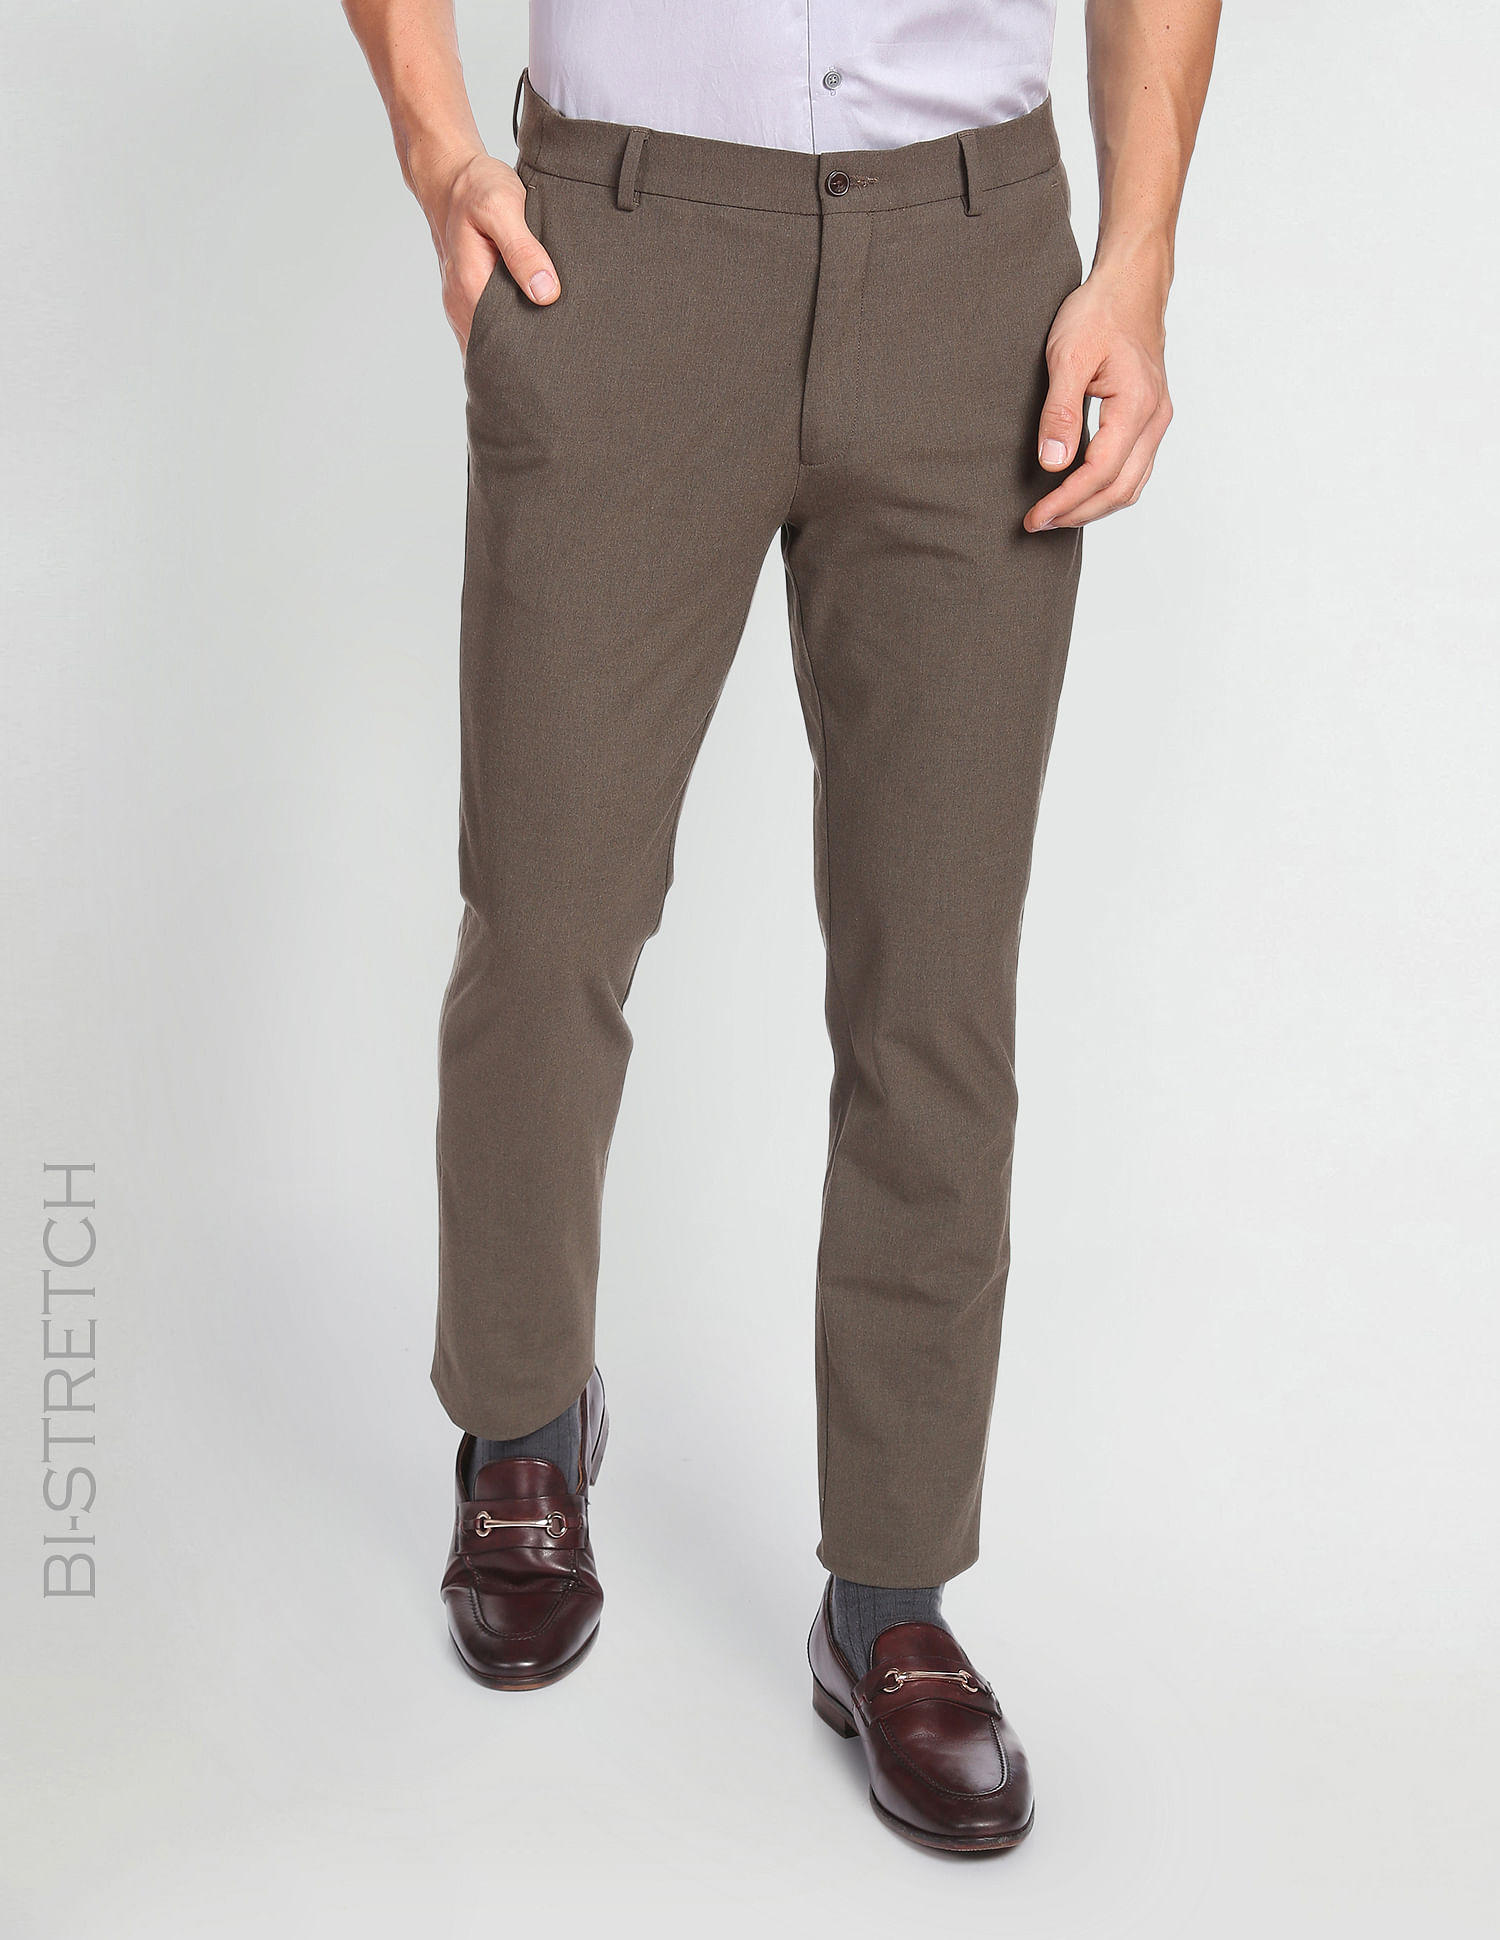 Tayion Classic Fit Suit Separates Pants | All Sale| Men's Wearhouse